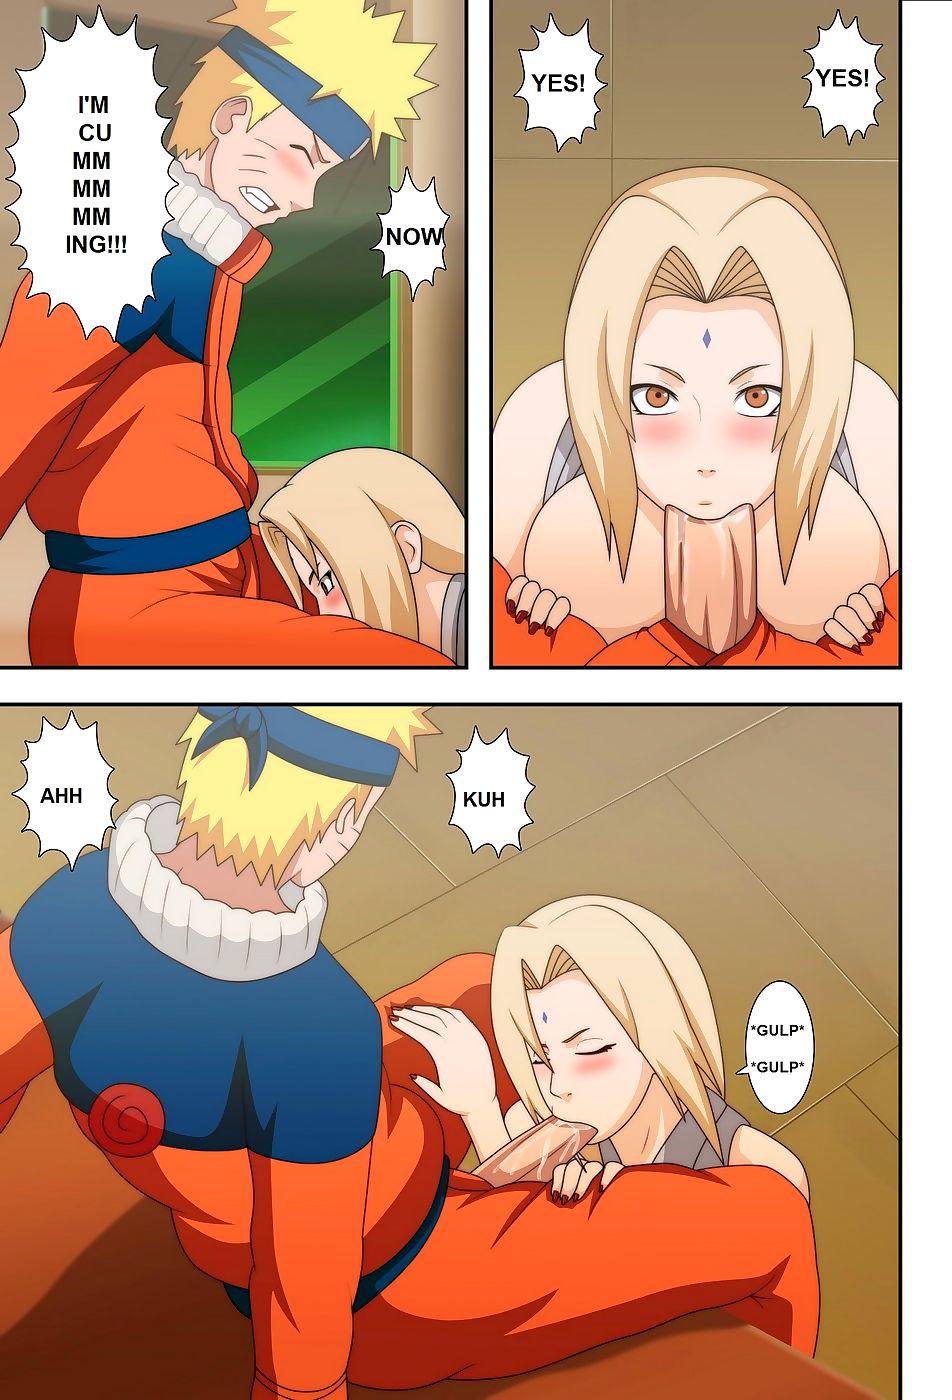 Naruto chichikage groot borst Ninja page 1